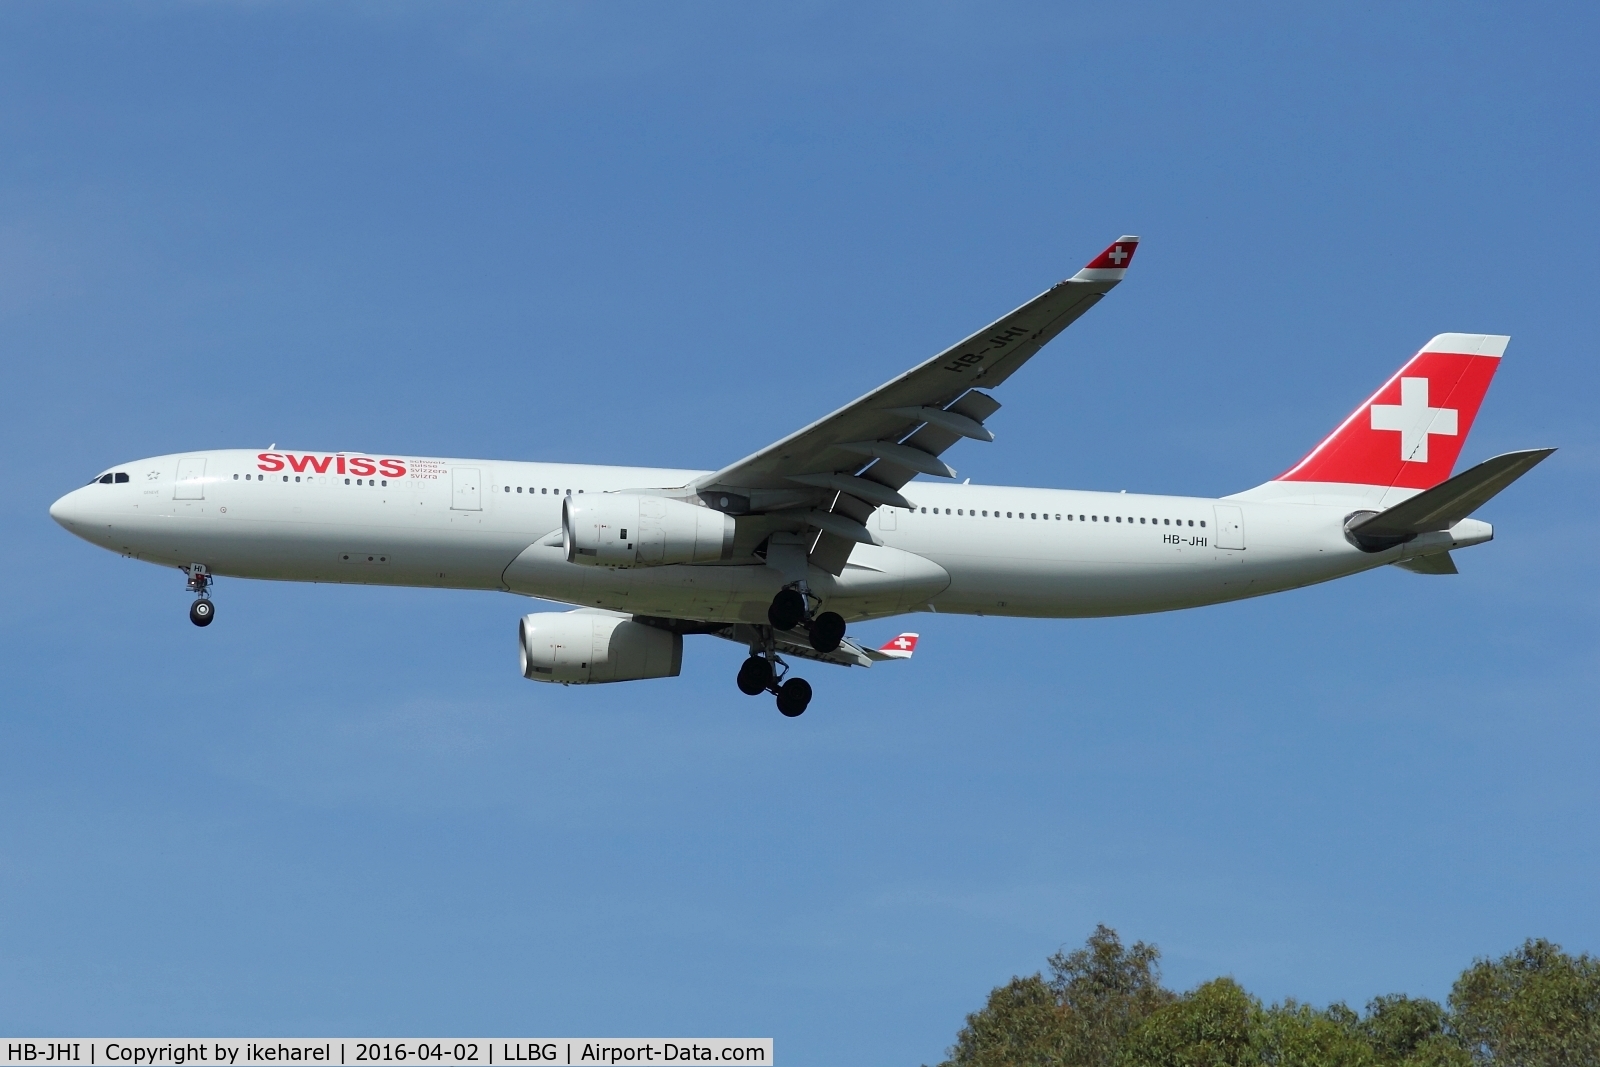 HB-JHI, 2010 Airbus A330-343X C/N 1181, Flight from Zurich, landing on runway 30.